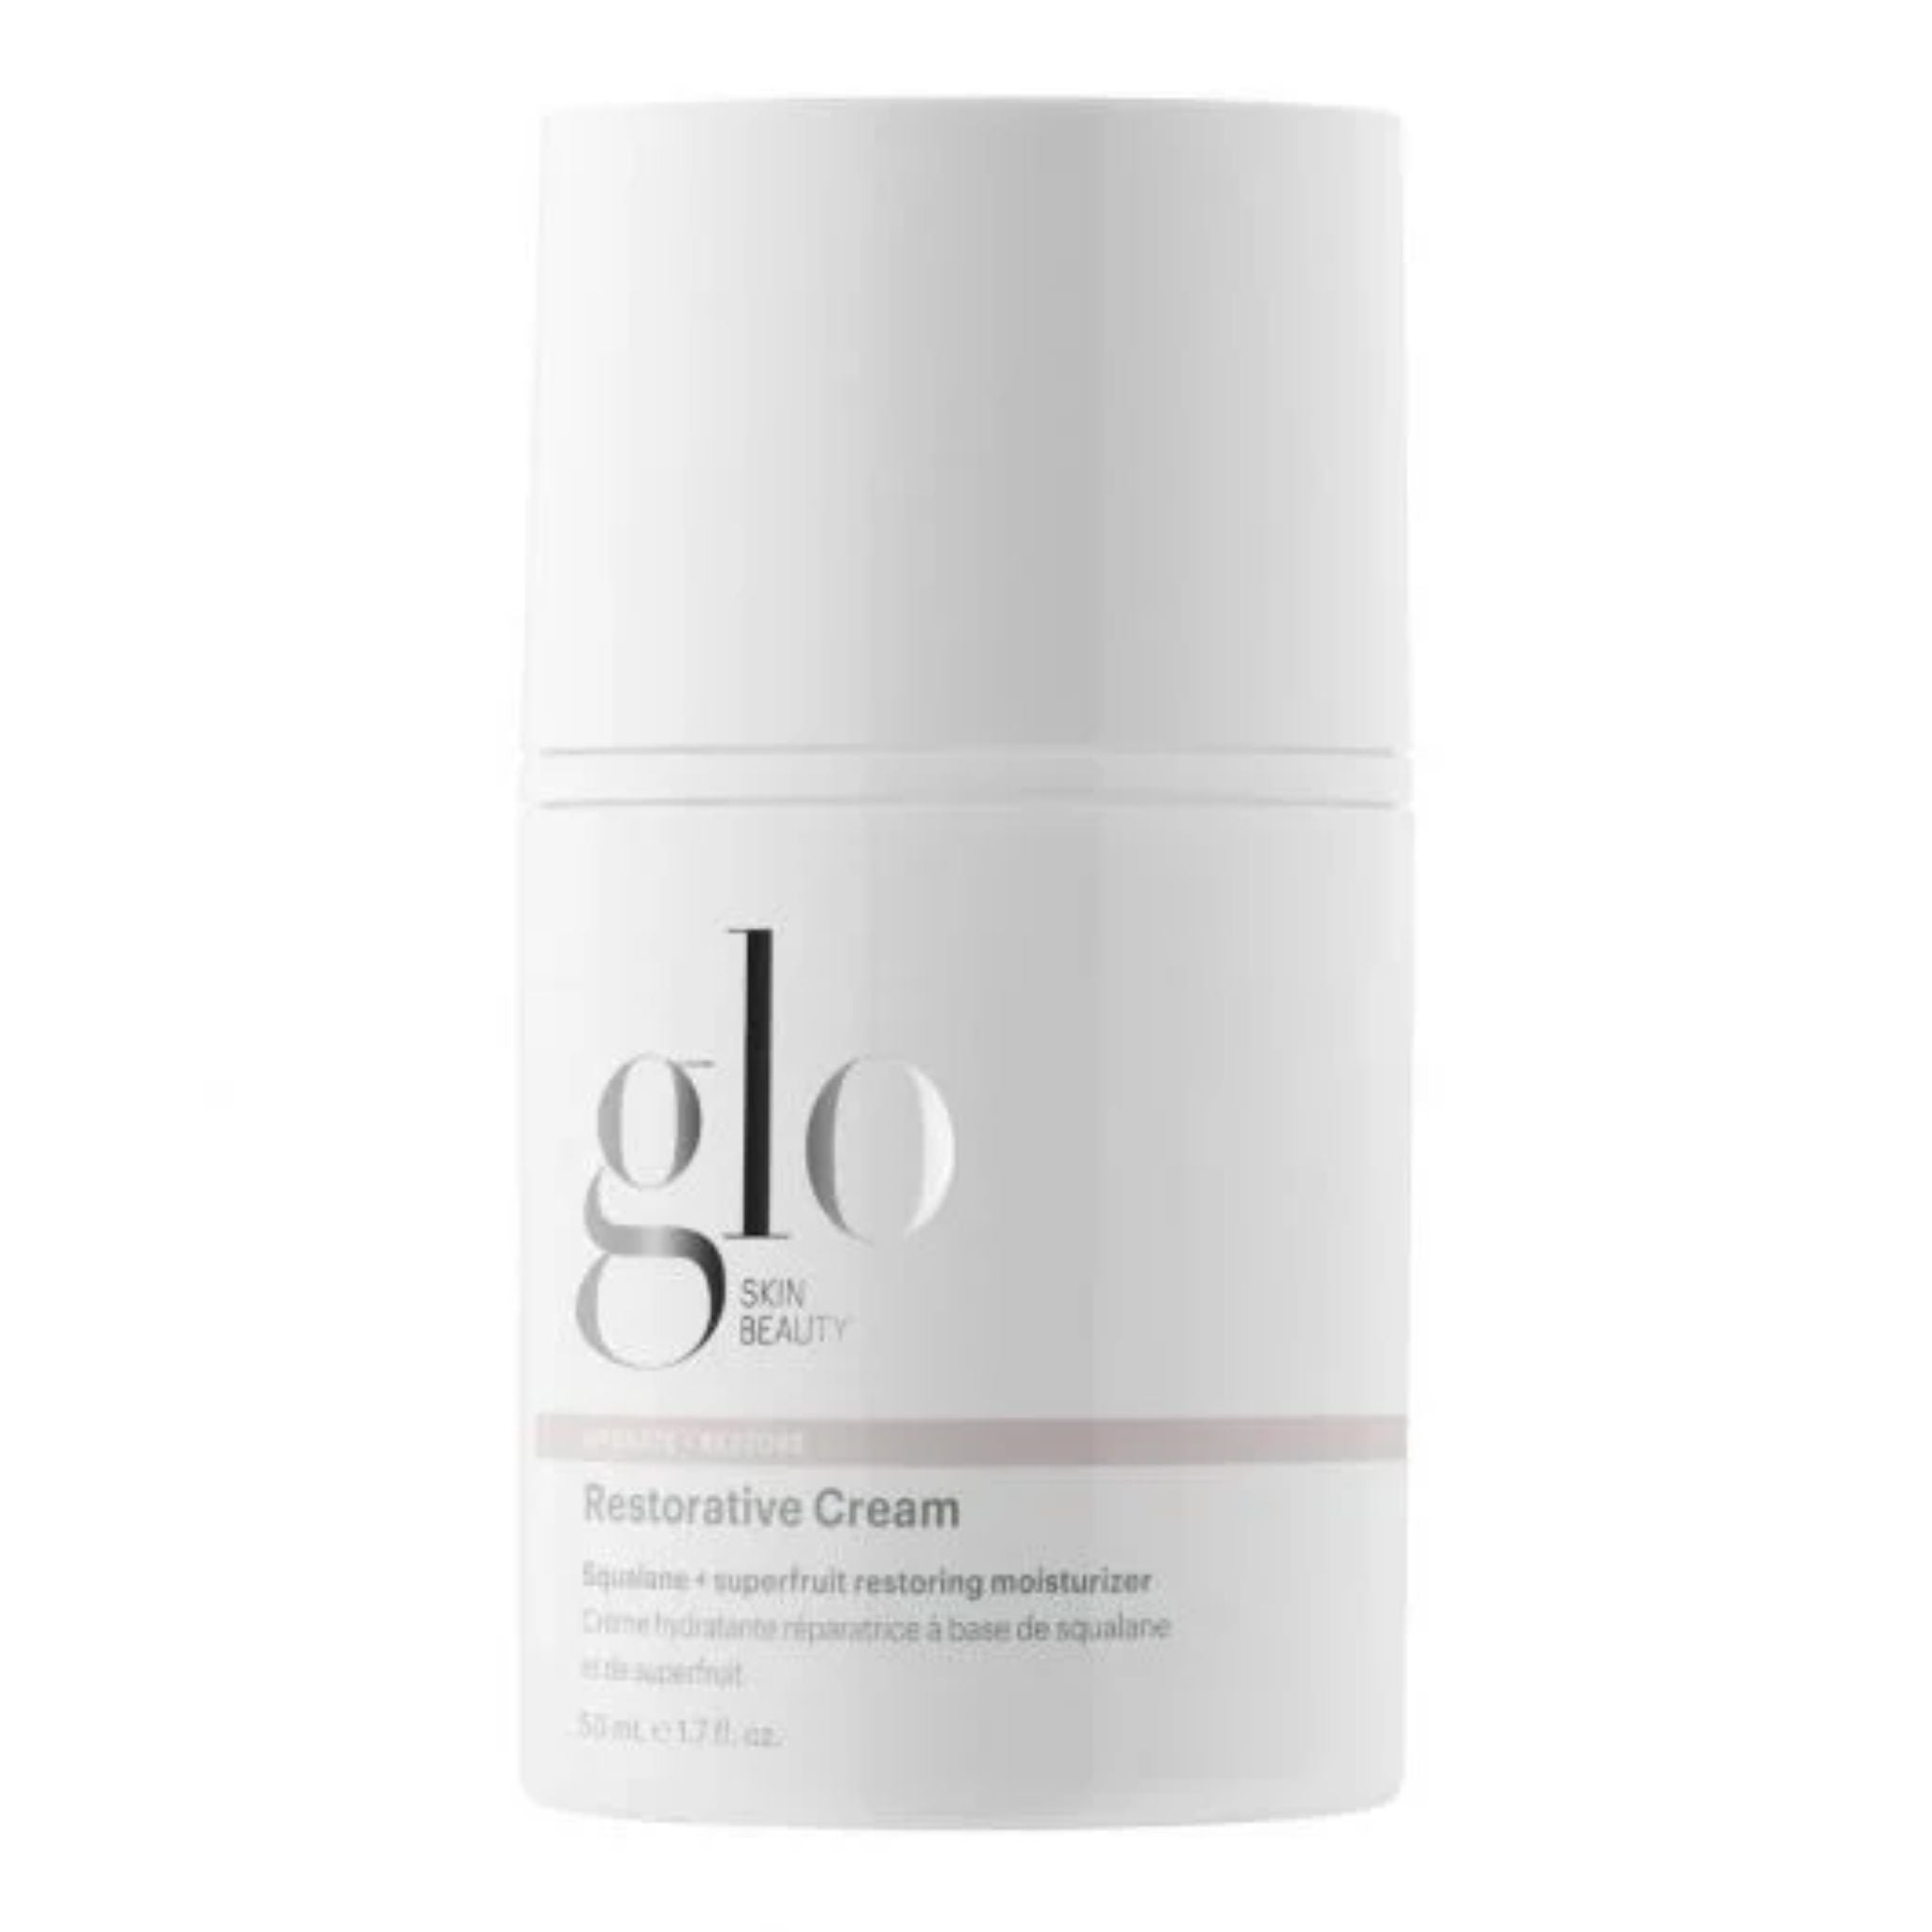 Glo Skin Beauty - Restorative Cream 50ml